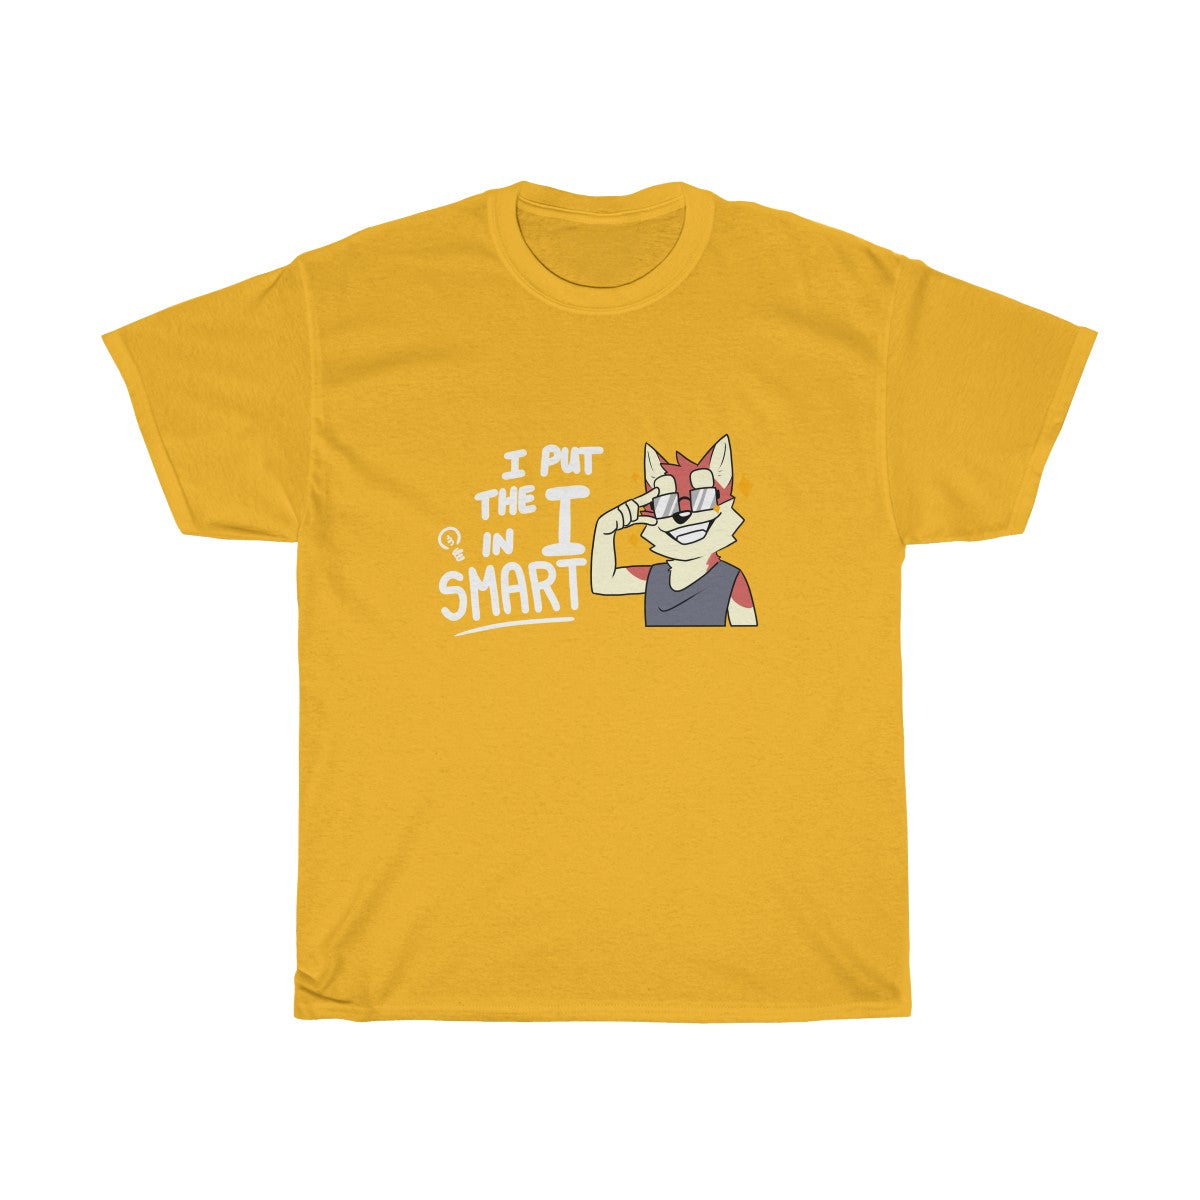 I in Smart - T-Shirt T-Shirt Ooka Gold S 